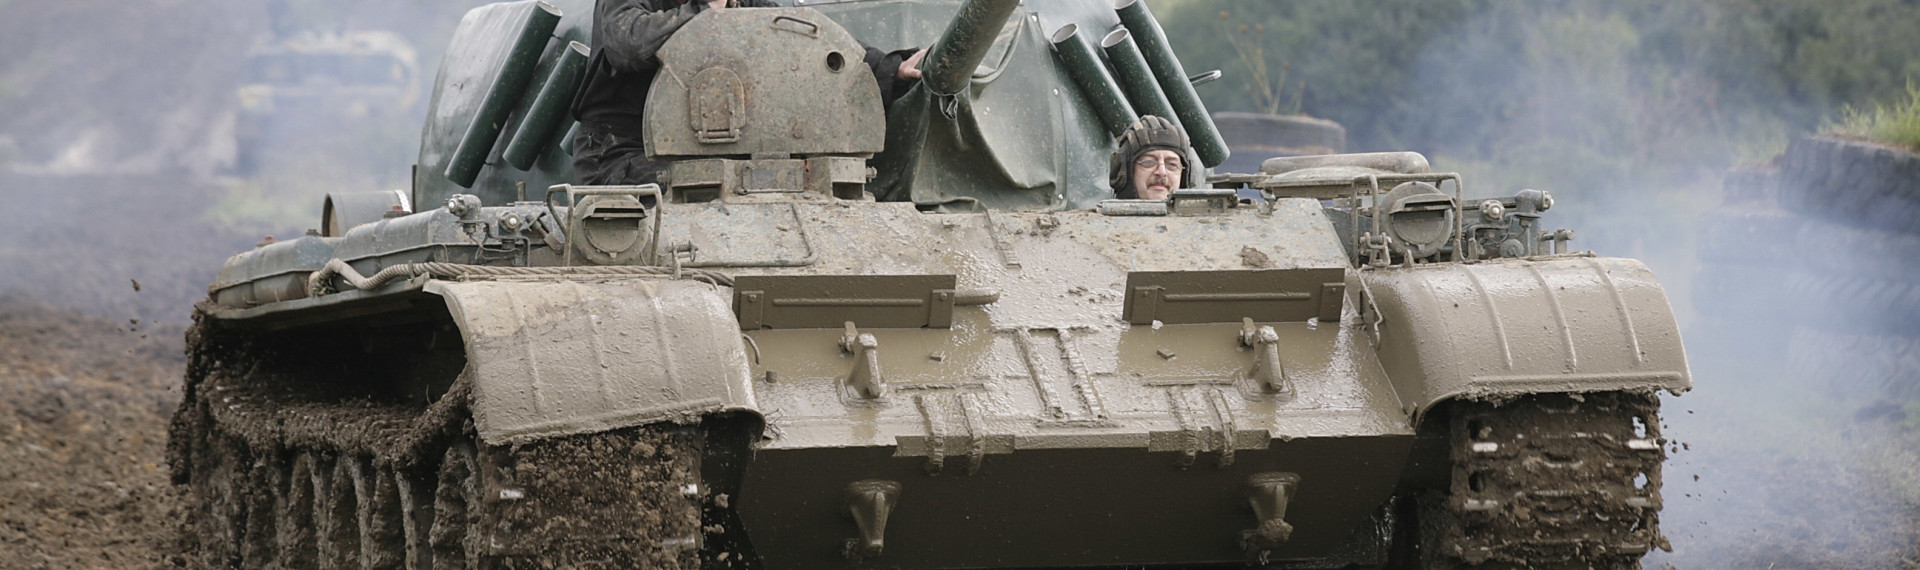 Kampfpanzer fahren Budapest | Fahrt einen T-55 selbst | Pissup Reisen